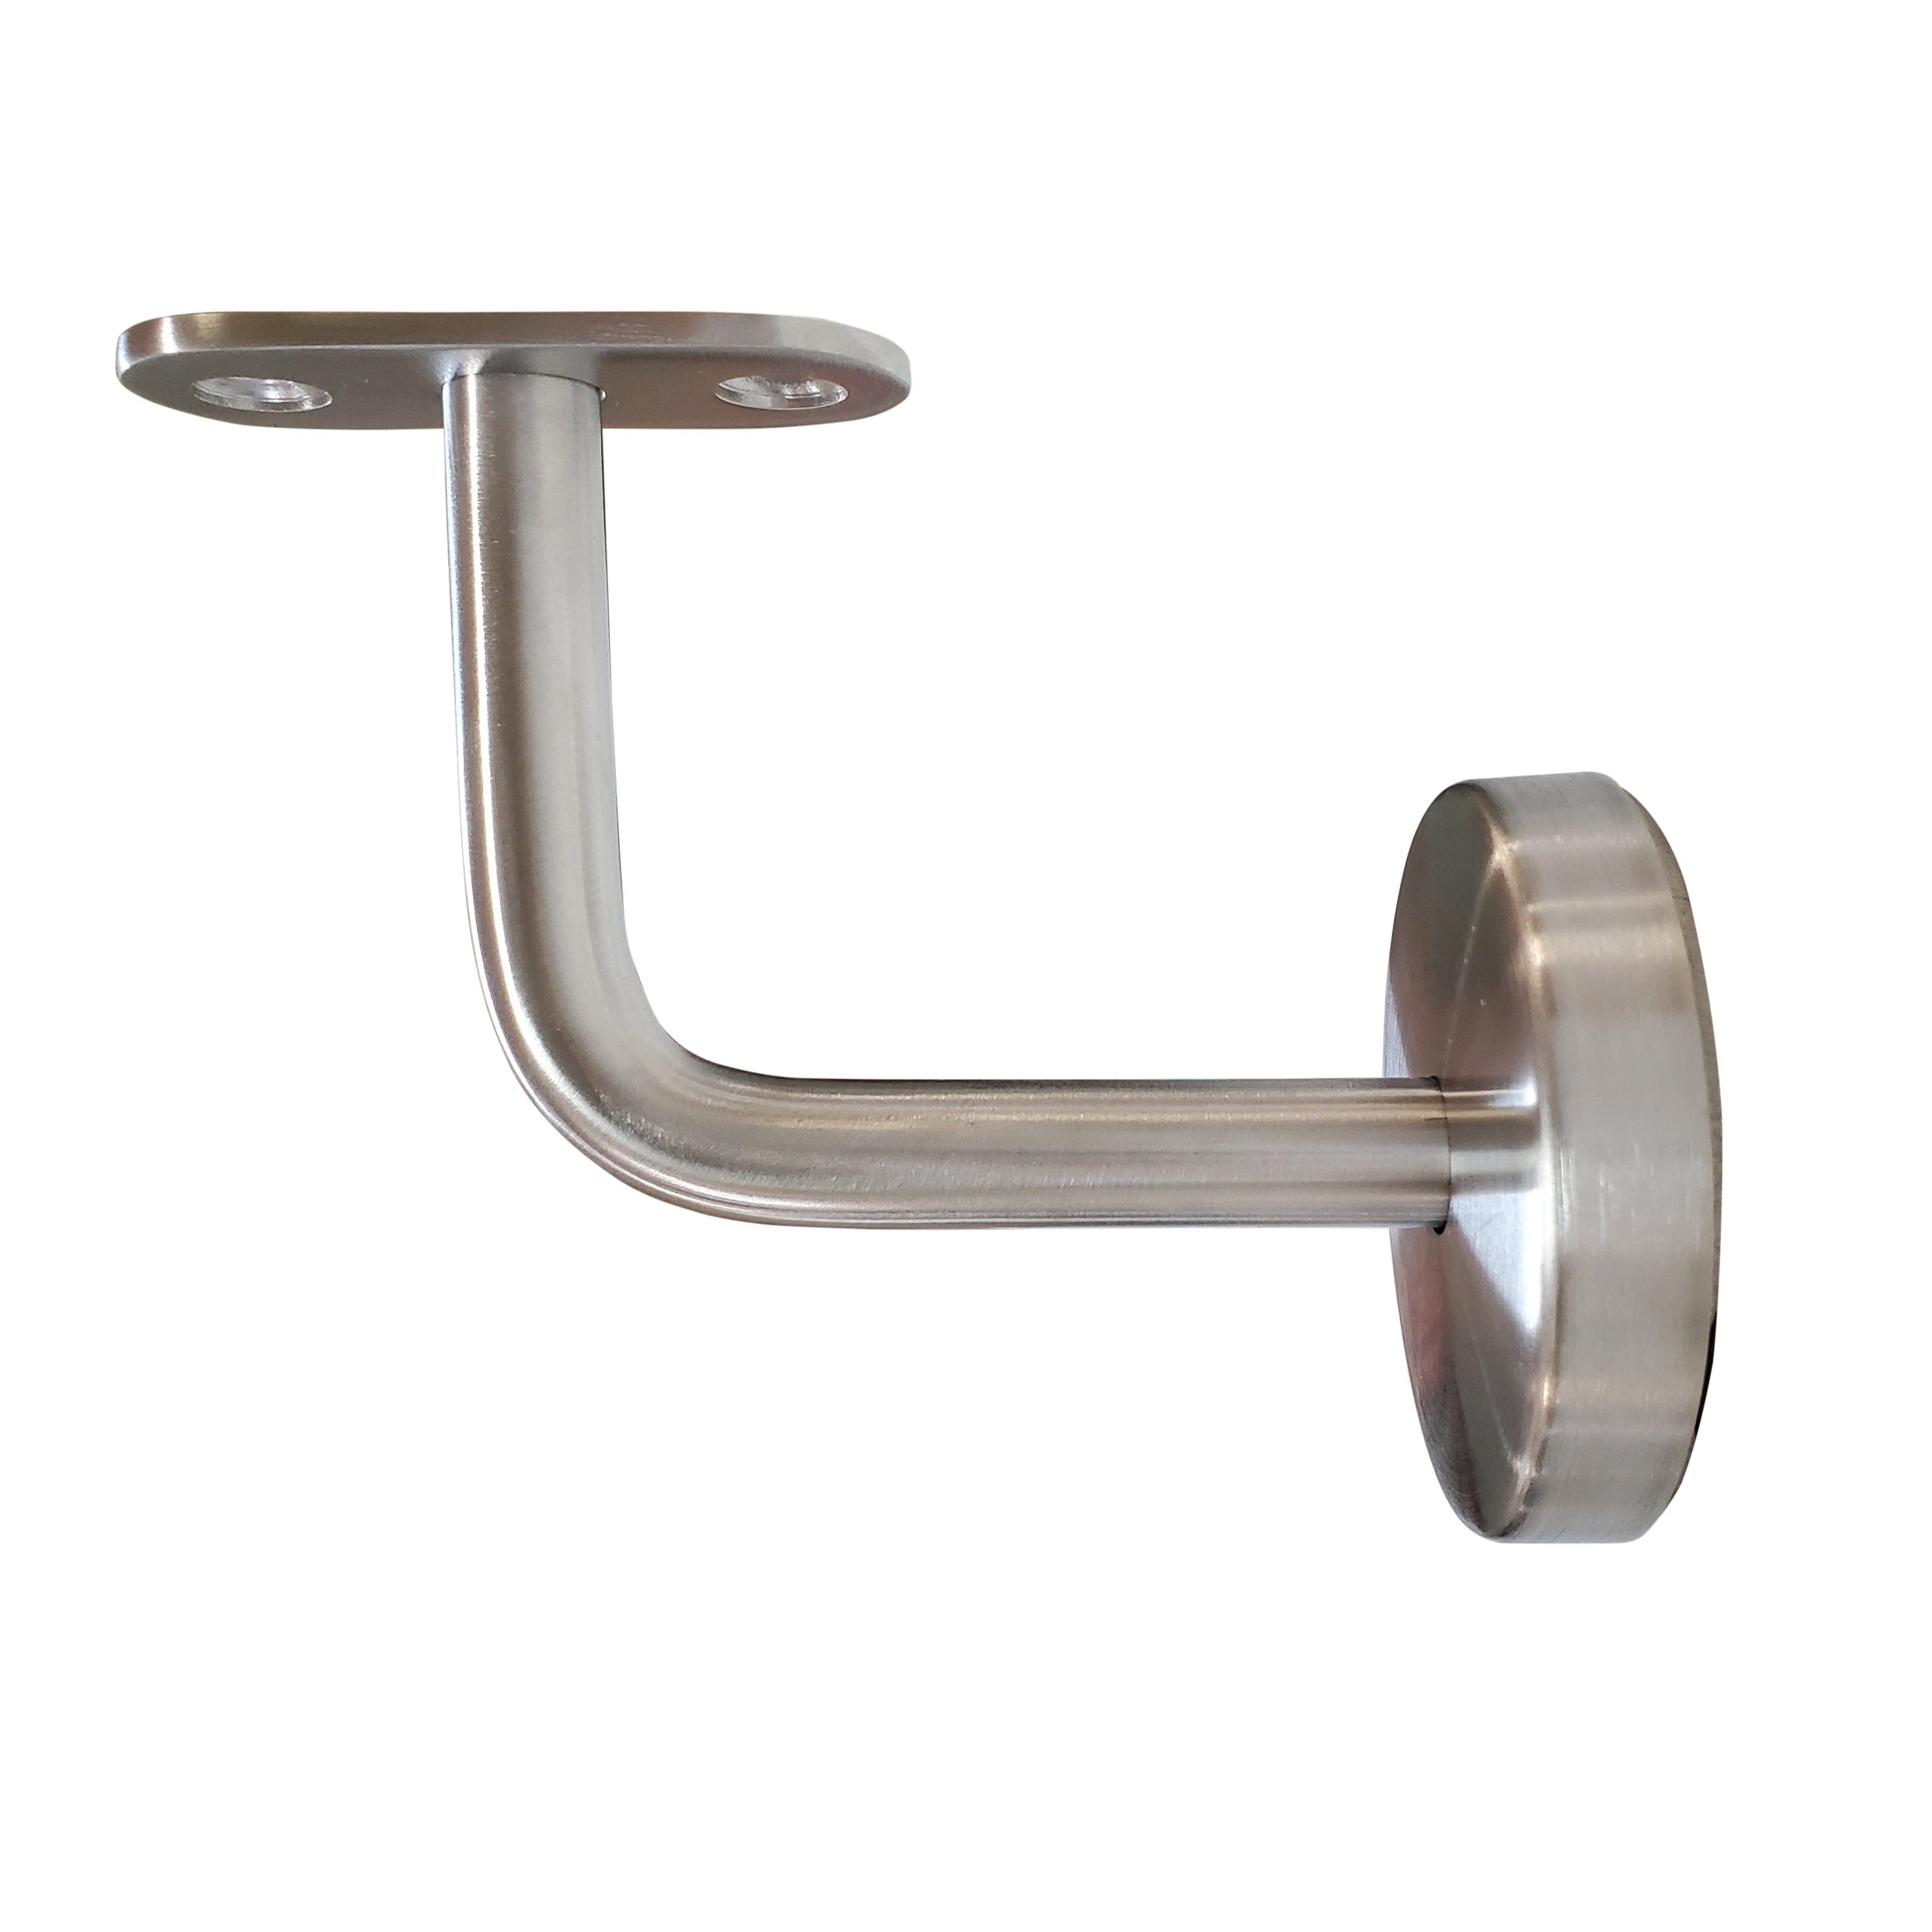 Handrail Bracket - Stainless Steel - Gauthier De LaPlante